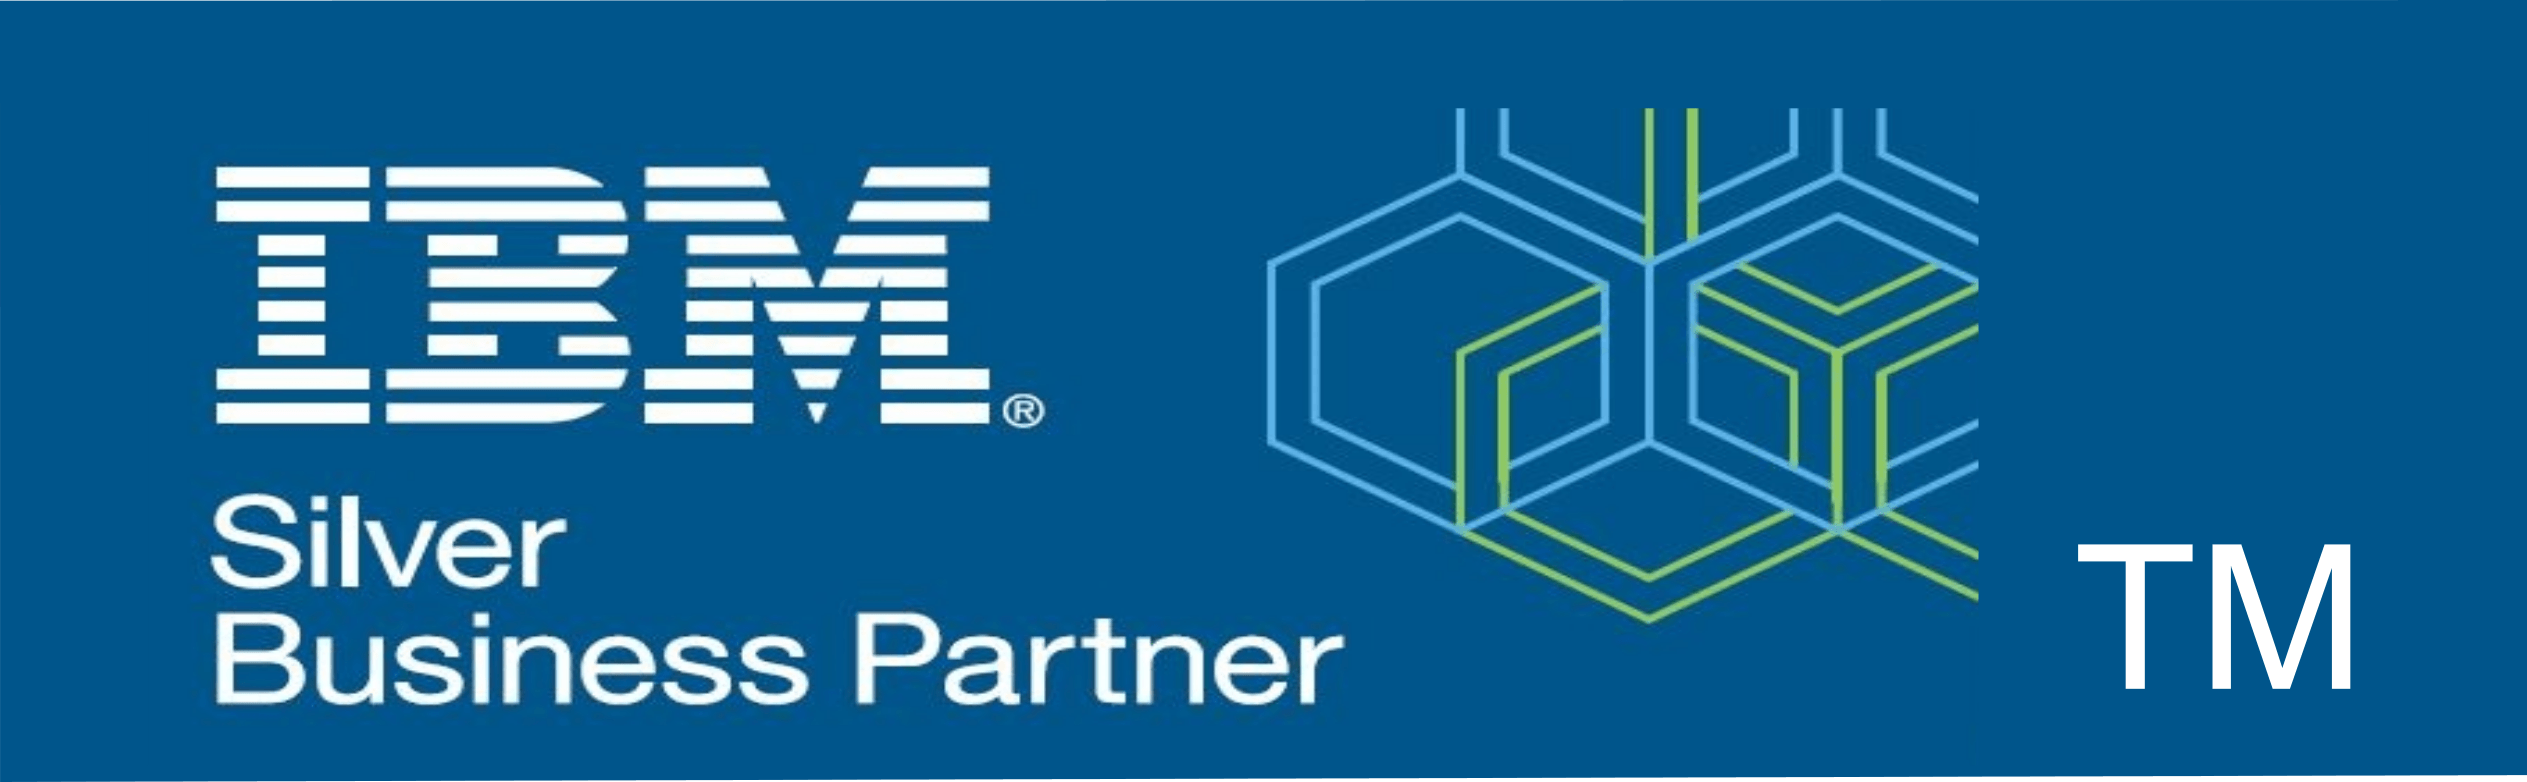 IBM Partner Logo - Algorisys